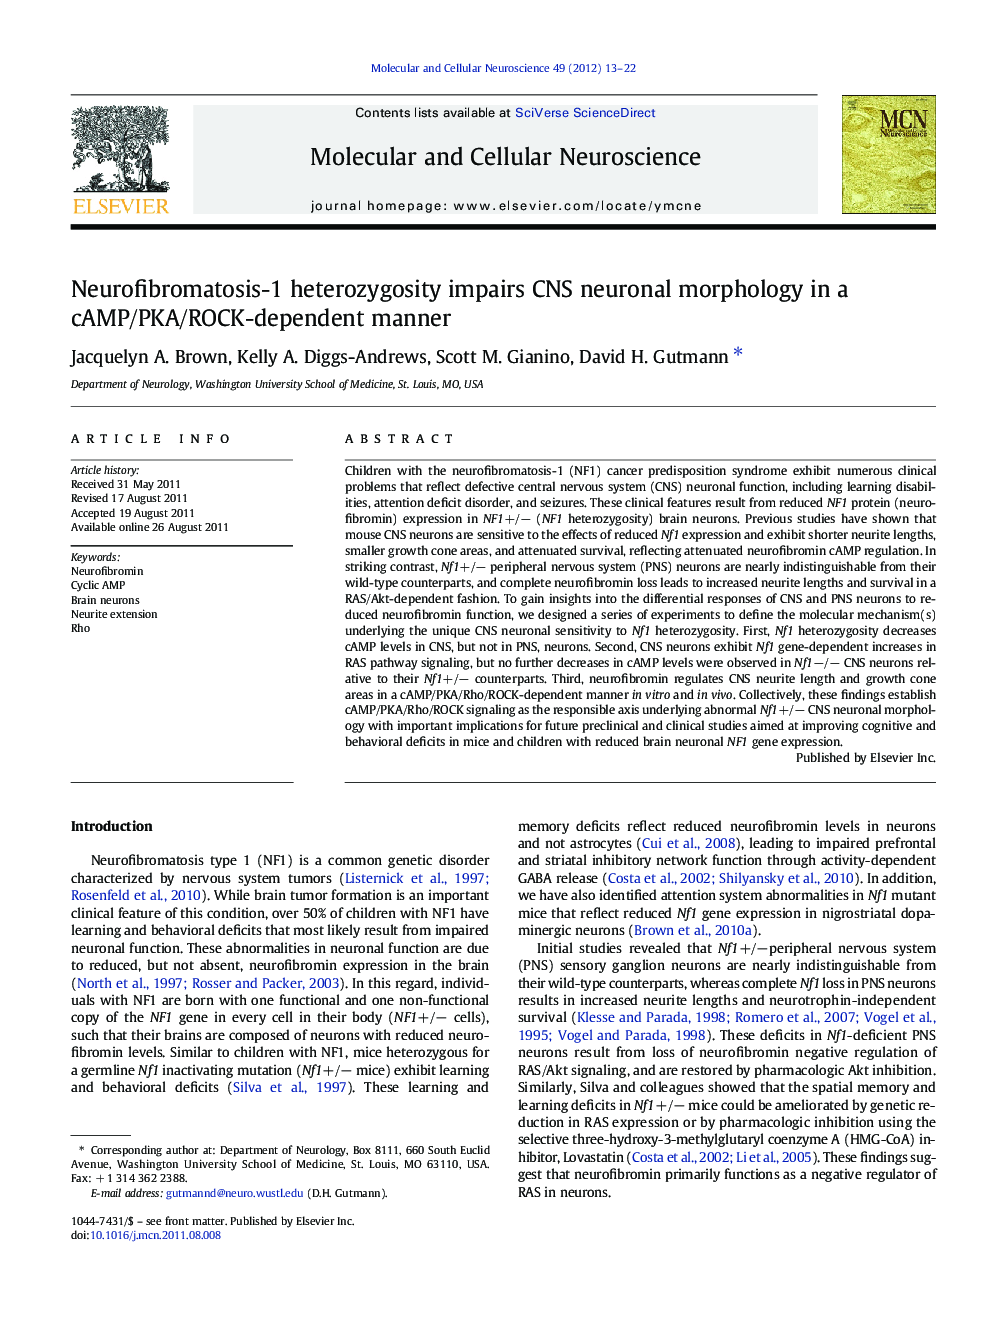 Neurofibromatosis-1 heterozygosity impairs CNS neuronal morphology in a cAMP/PKA/ROCK-dependent manner